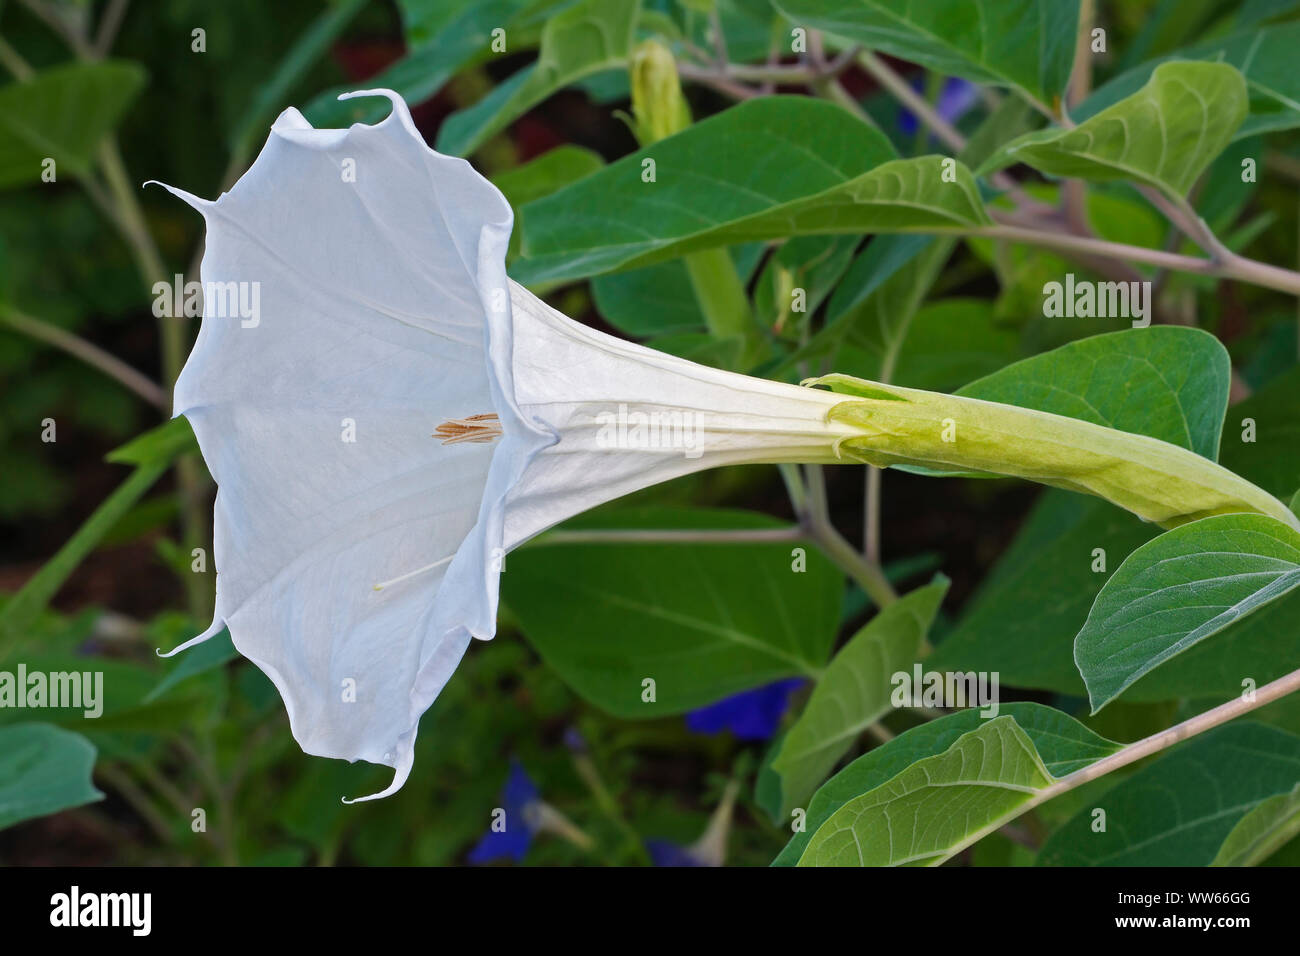 Devil's trumpet, Datura metel, White trumpet shaped flower growing outdoor. Stock Photo